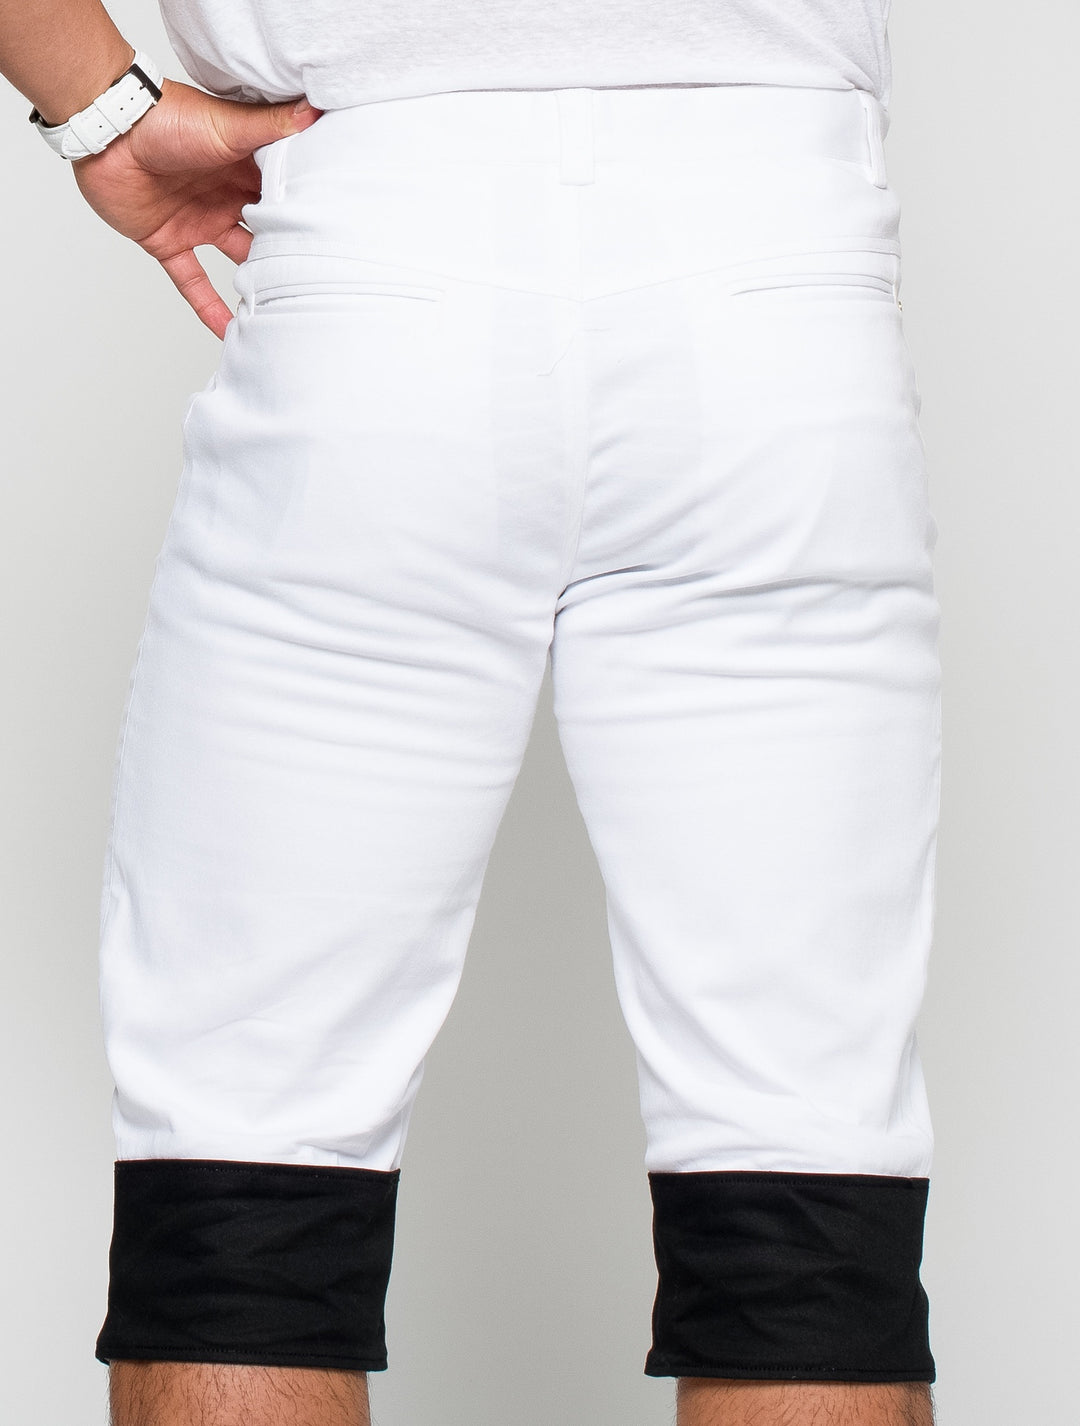 VanCan Men's Black & White Shorts - ENE TRENDS -custom designed-personalized-near me-shirt-clothes-dress-amazon-top-luxury-fashion-men-women-kids-streetwear-IG